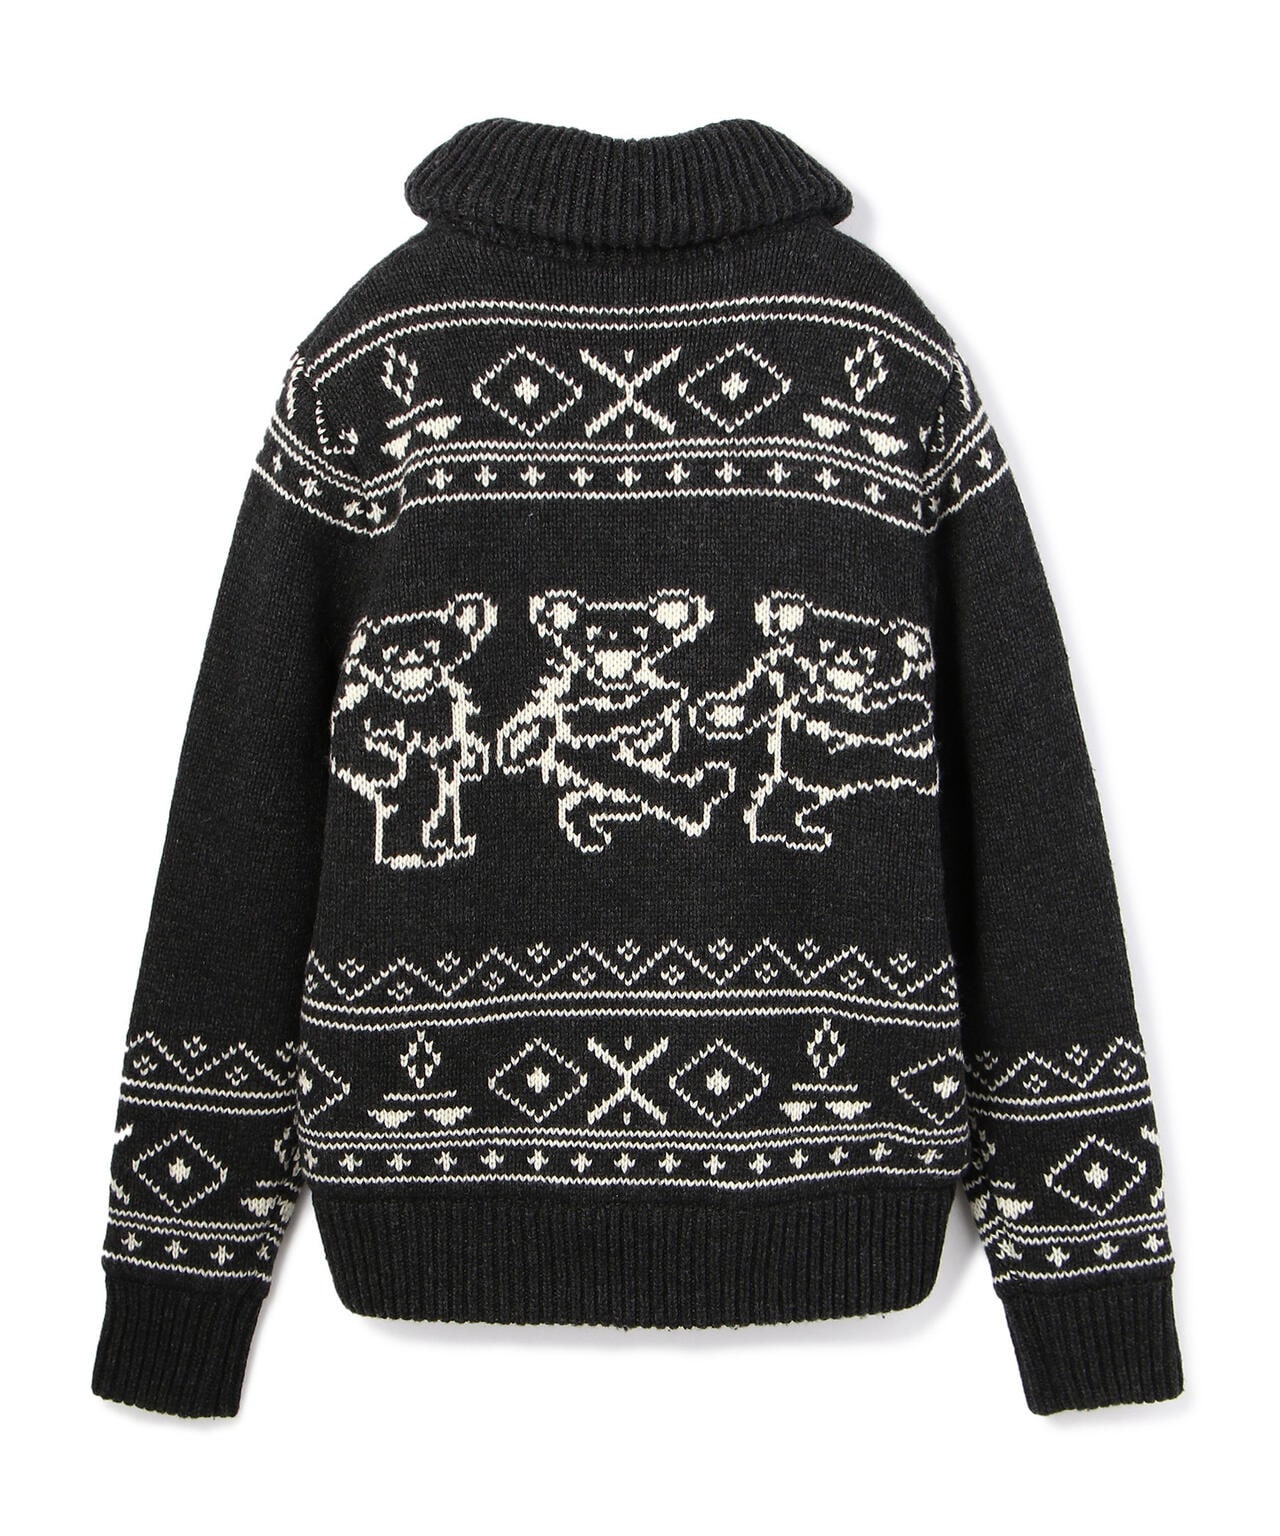 Schottのセーター